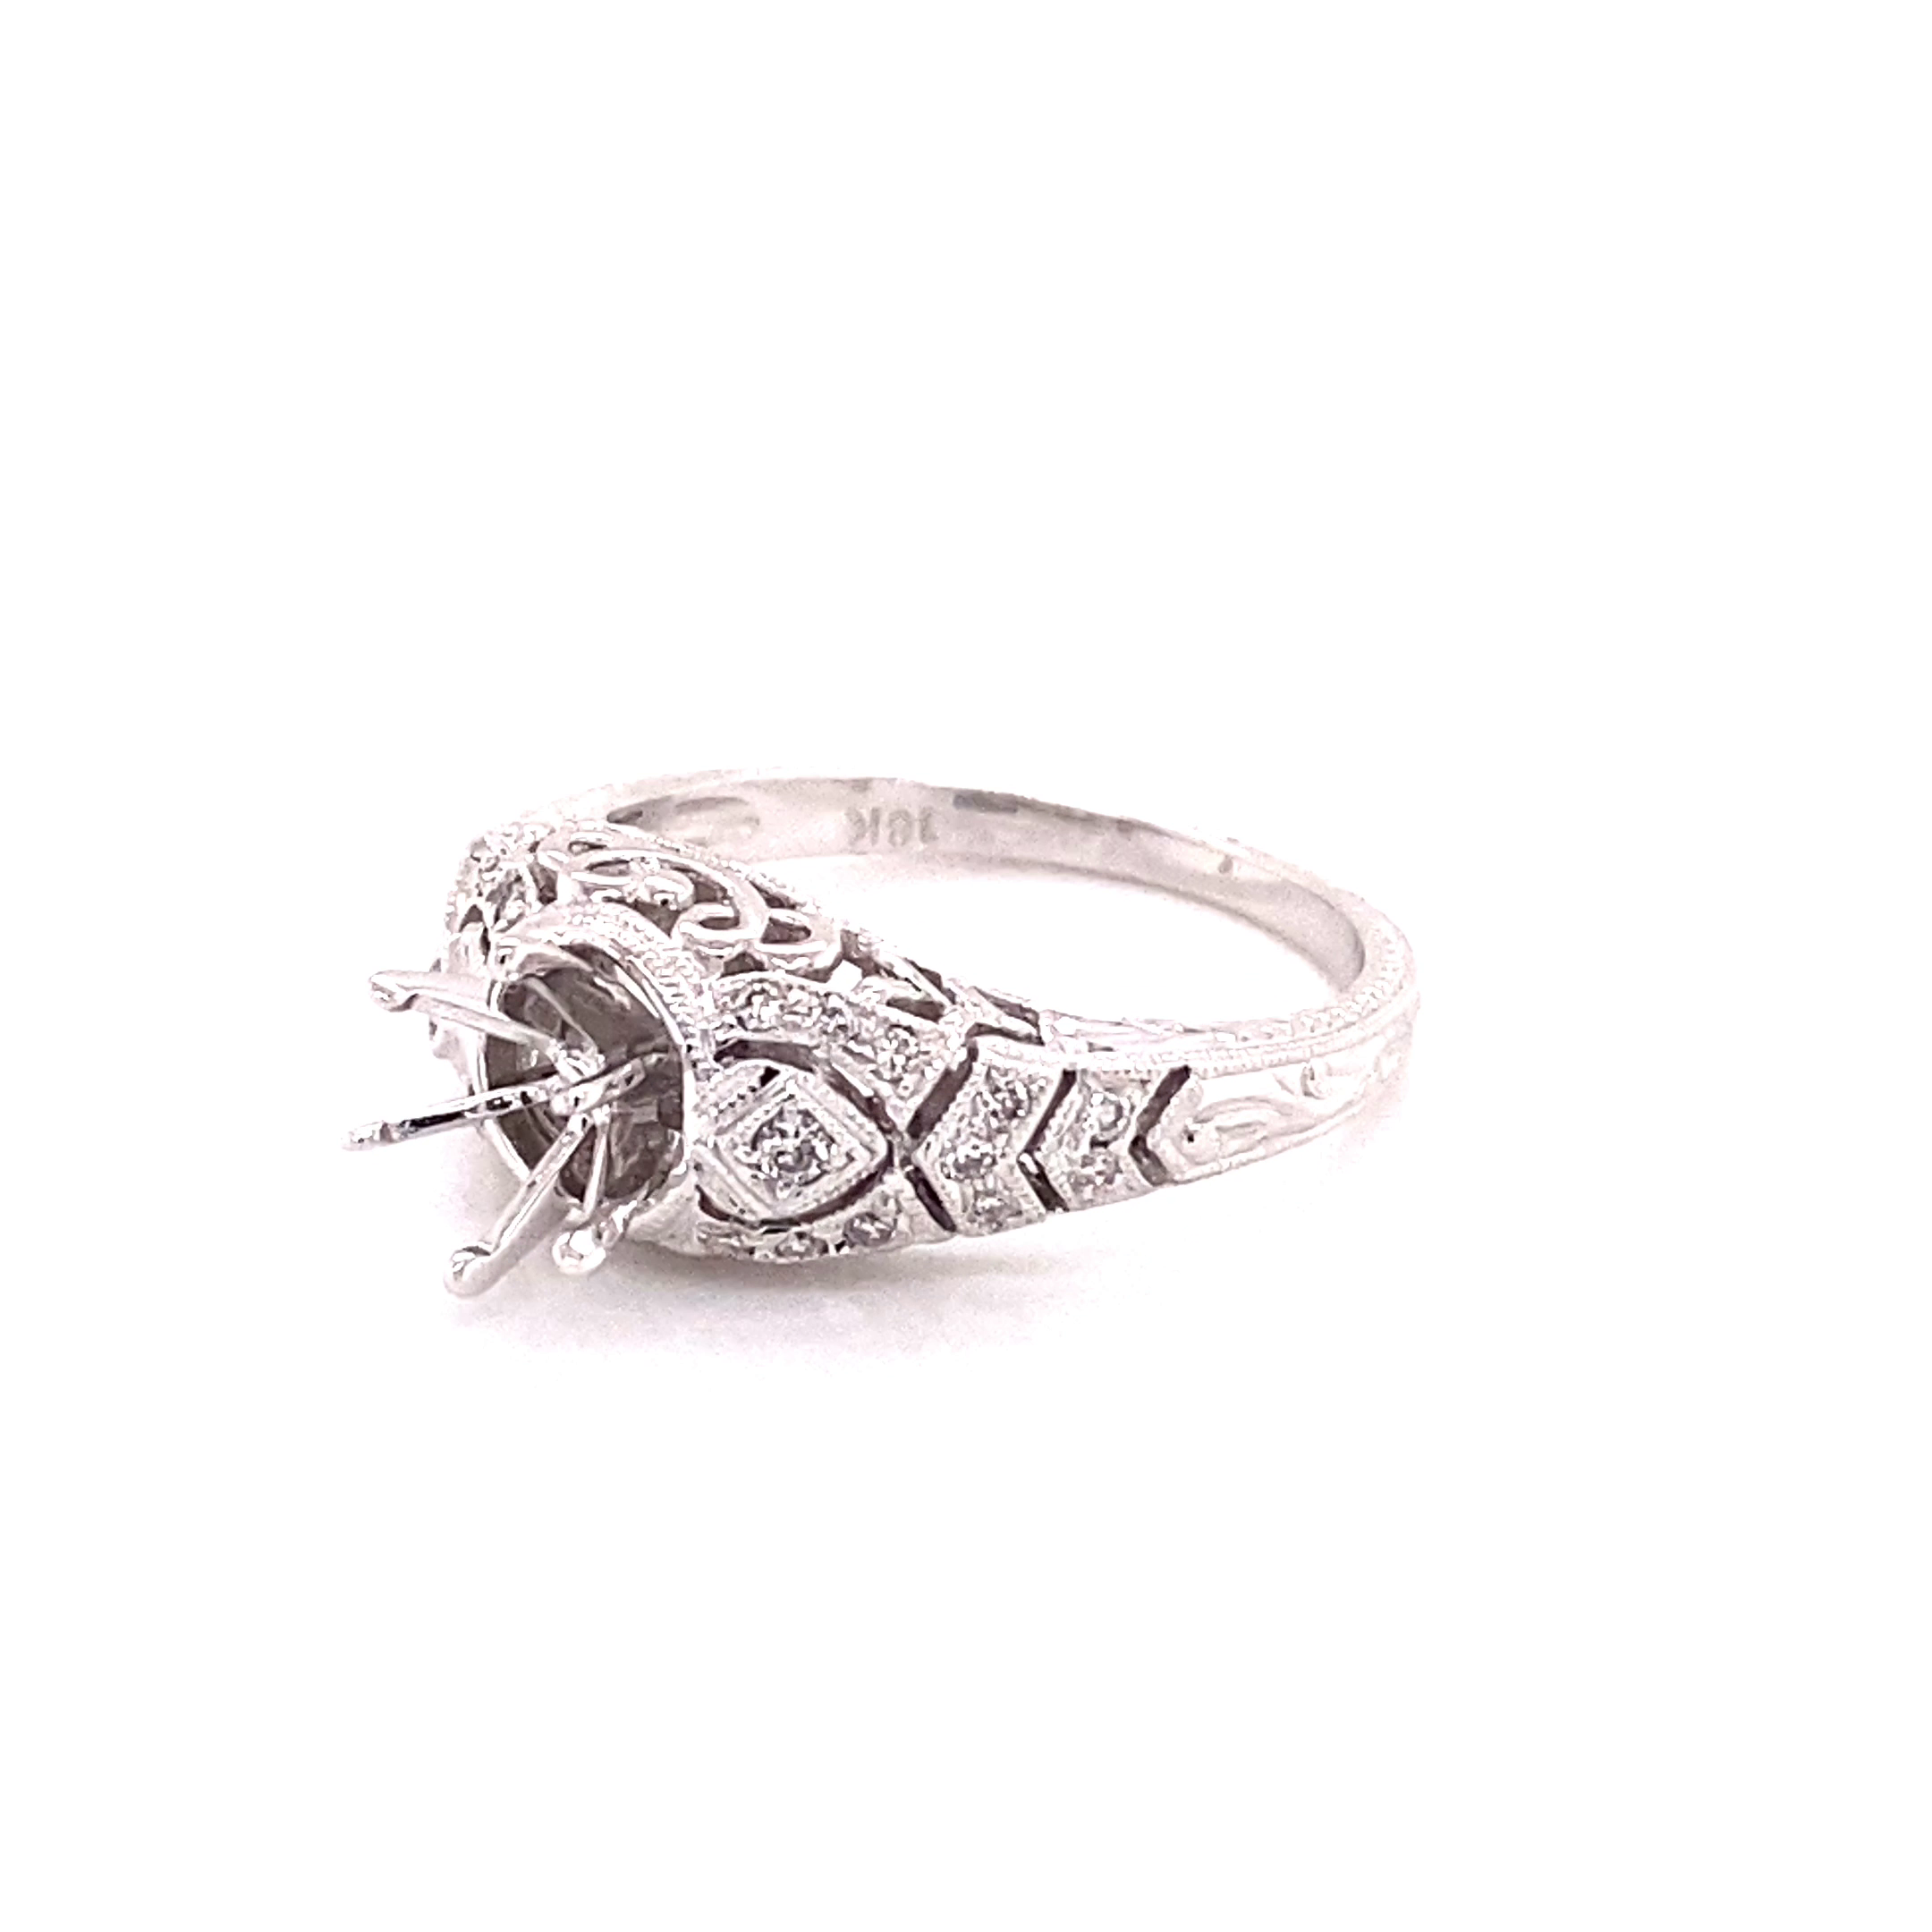 Platinum Ring with Diamonds, an Art Deco Setting Head